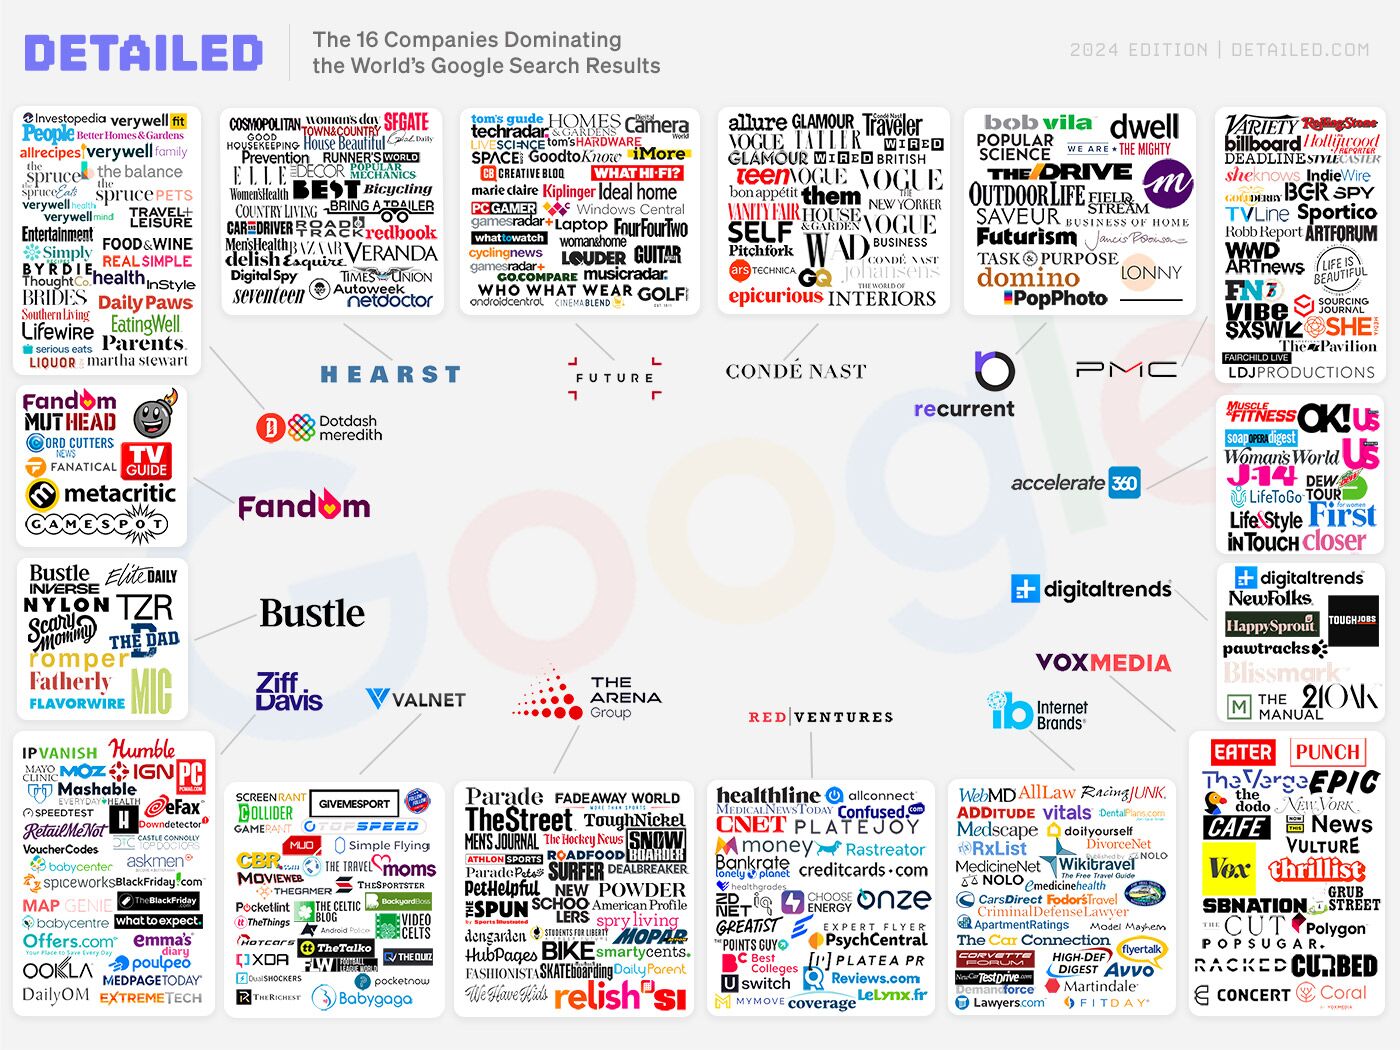 Les 16 entreprises qui obtiennent 3,5 milliards de clics mensuels de Google sur 588 marques